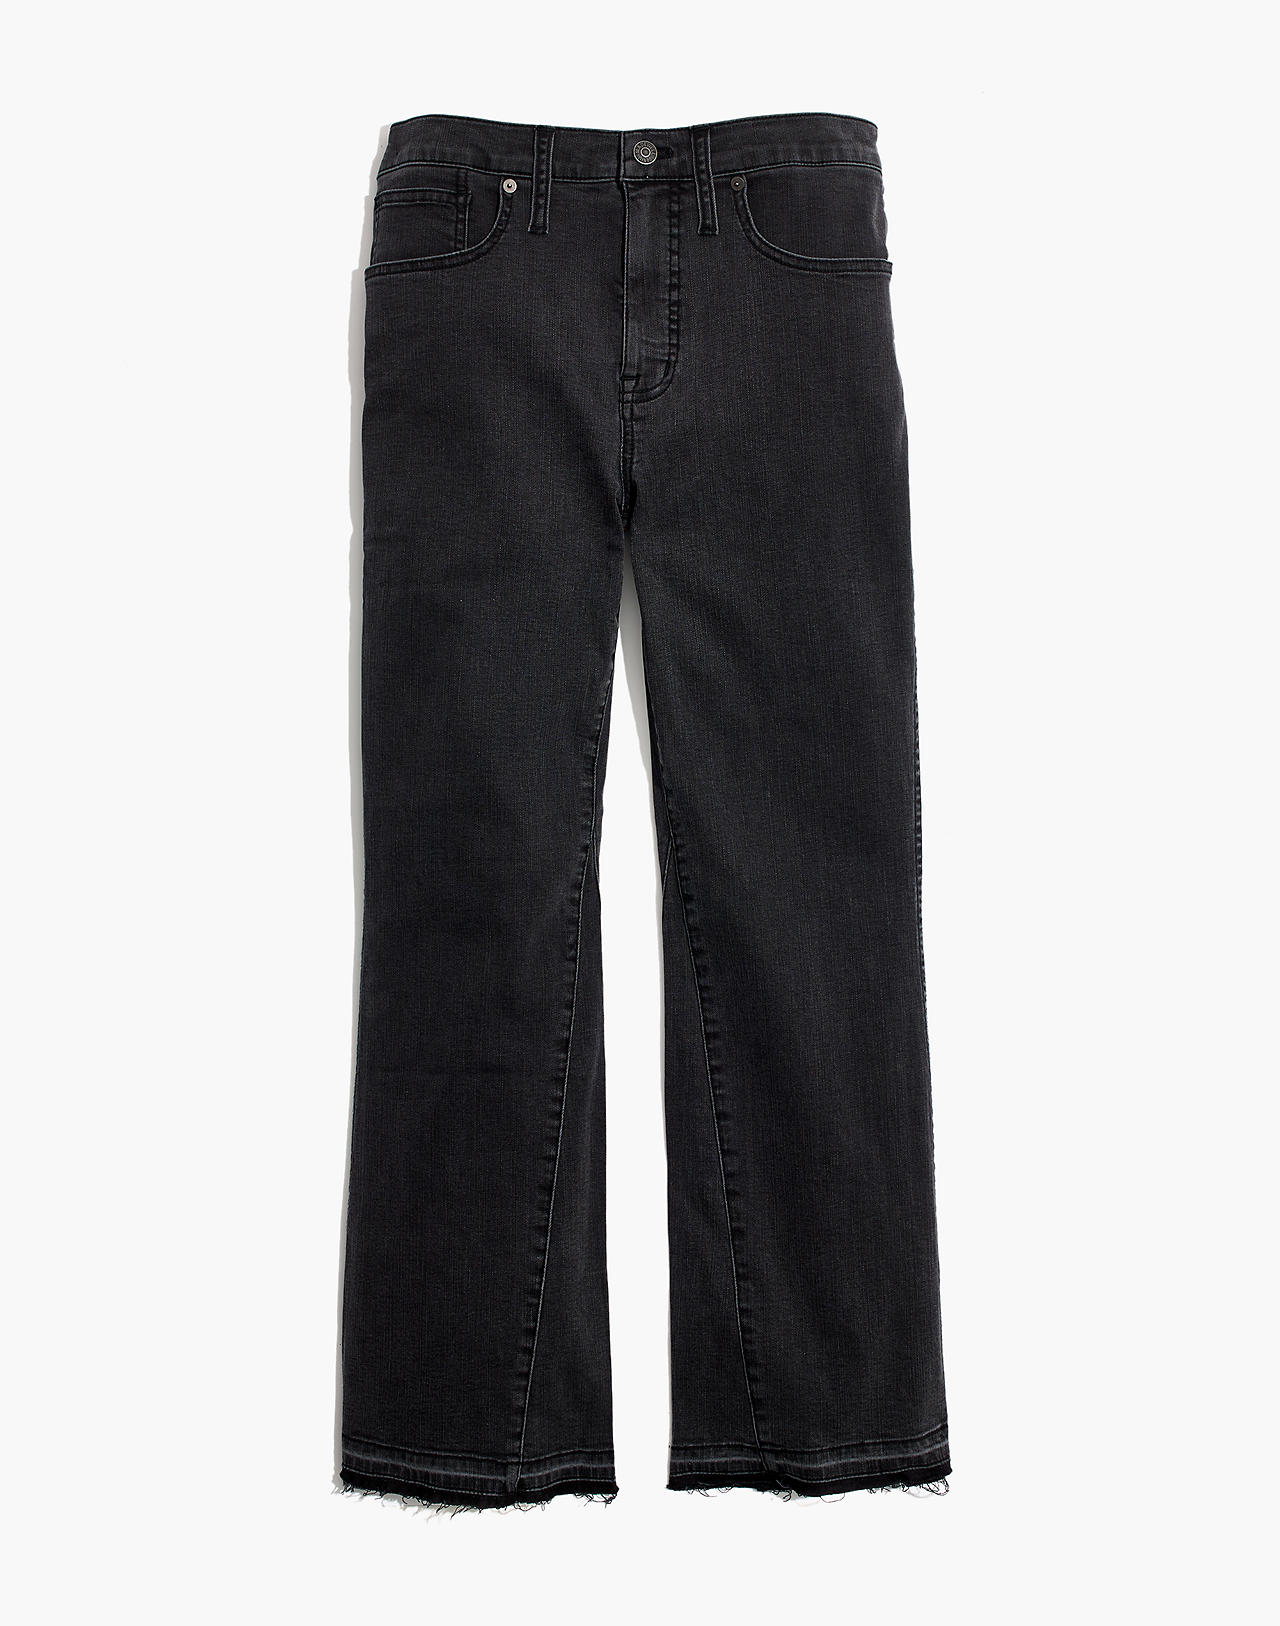 Cali Demi-Boot Jeans in Tobin Wash: Inset-Leg Edition